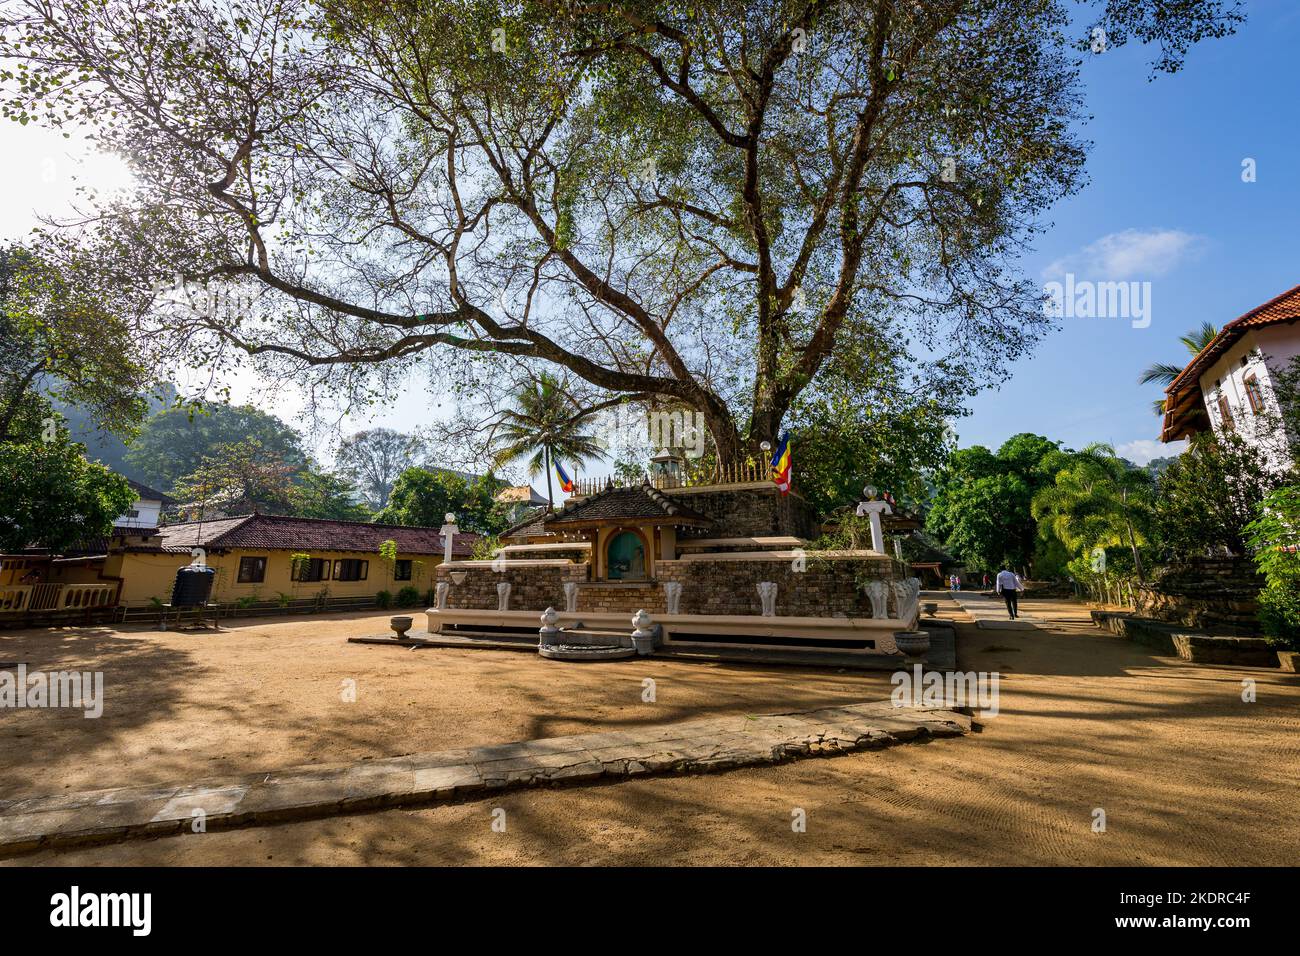 Templo de la Reliquia del Diente, famoso templo que alberga la reliquia del diente de Buda, Patrimonio de la Humanidad de la UNESCO, Kandy, Sri Lanka, Asia. Foto de stock